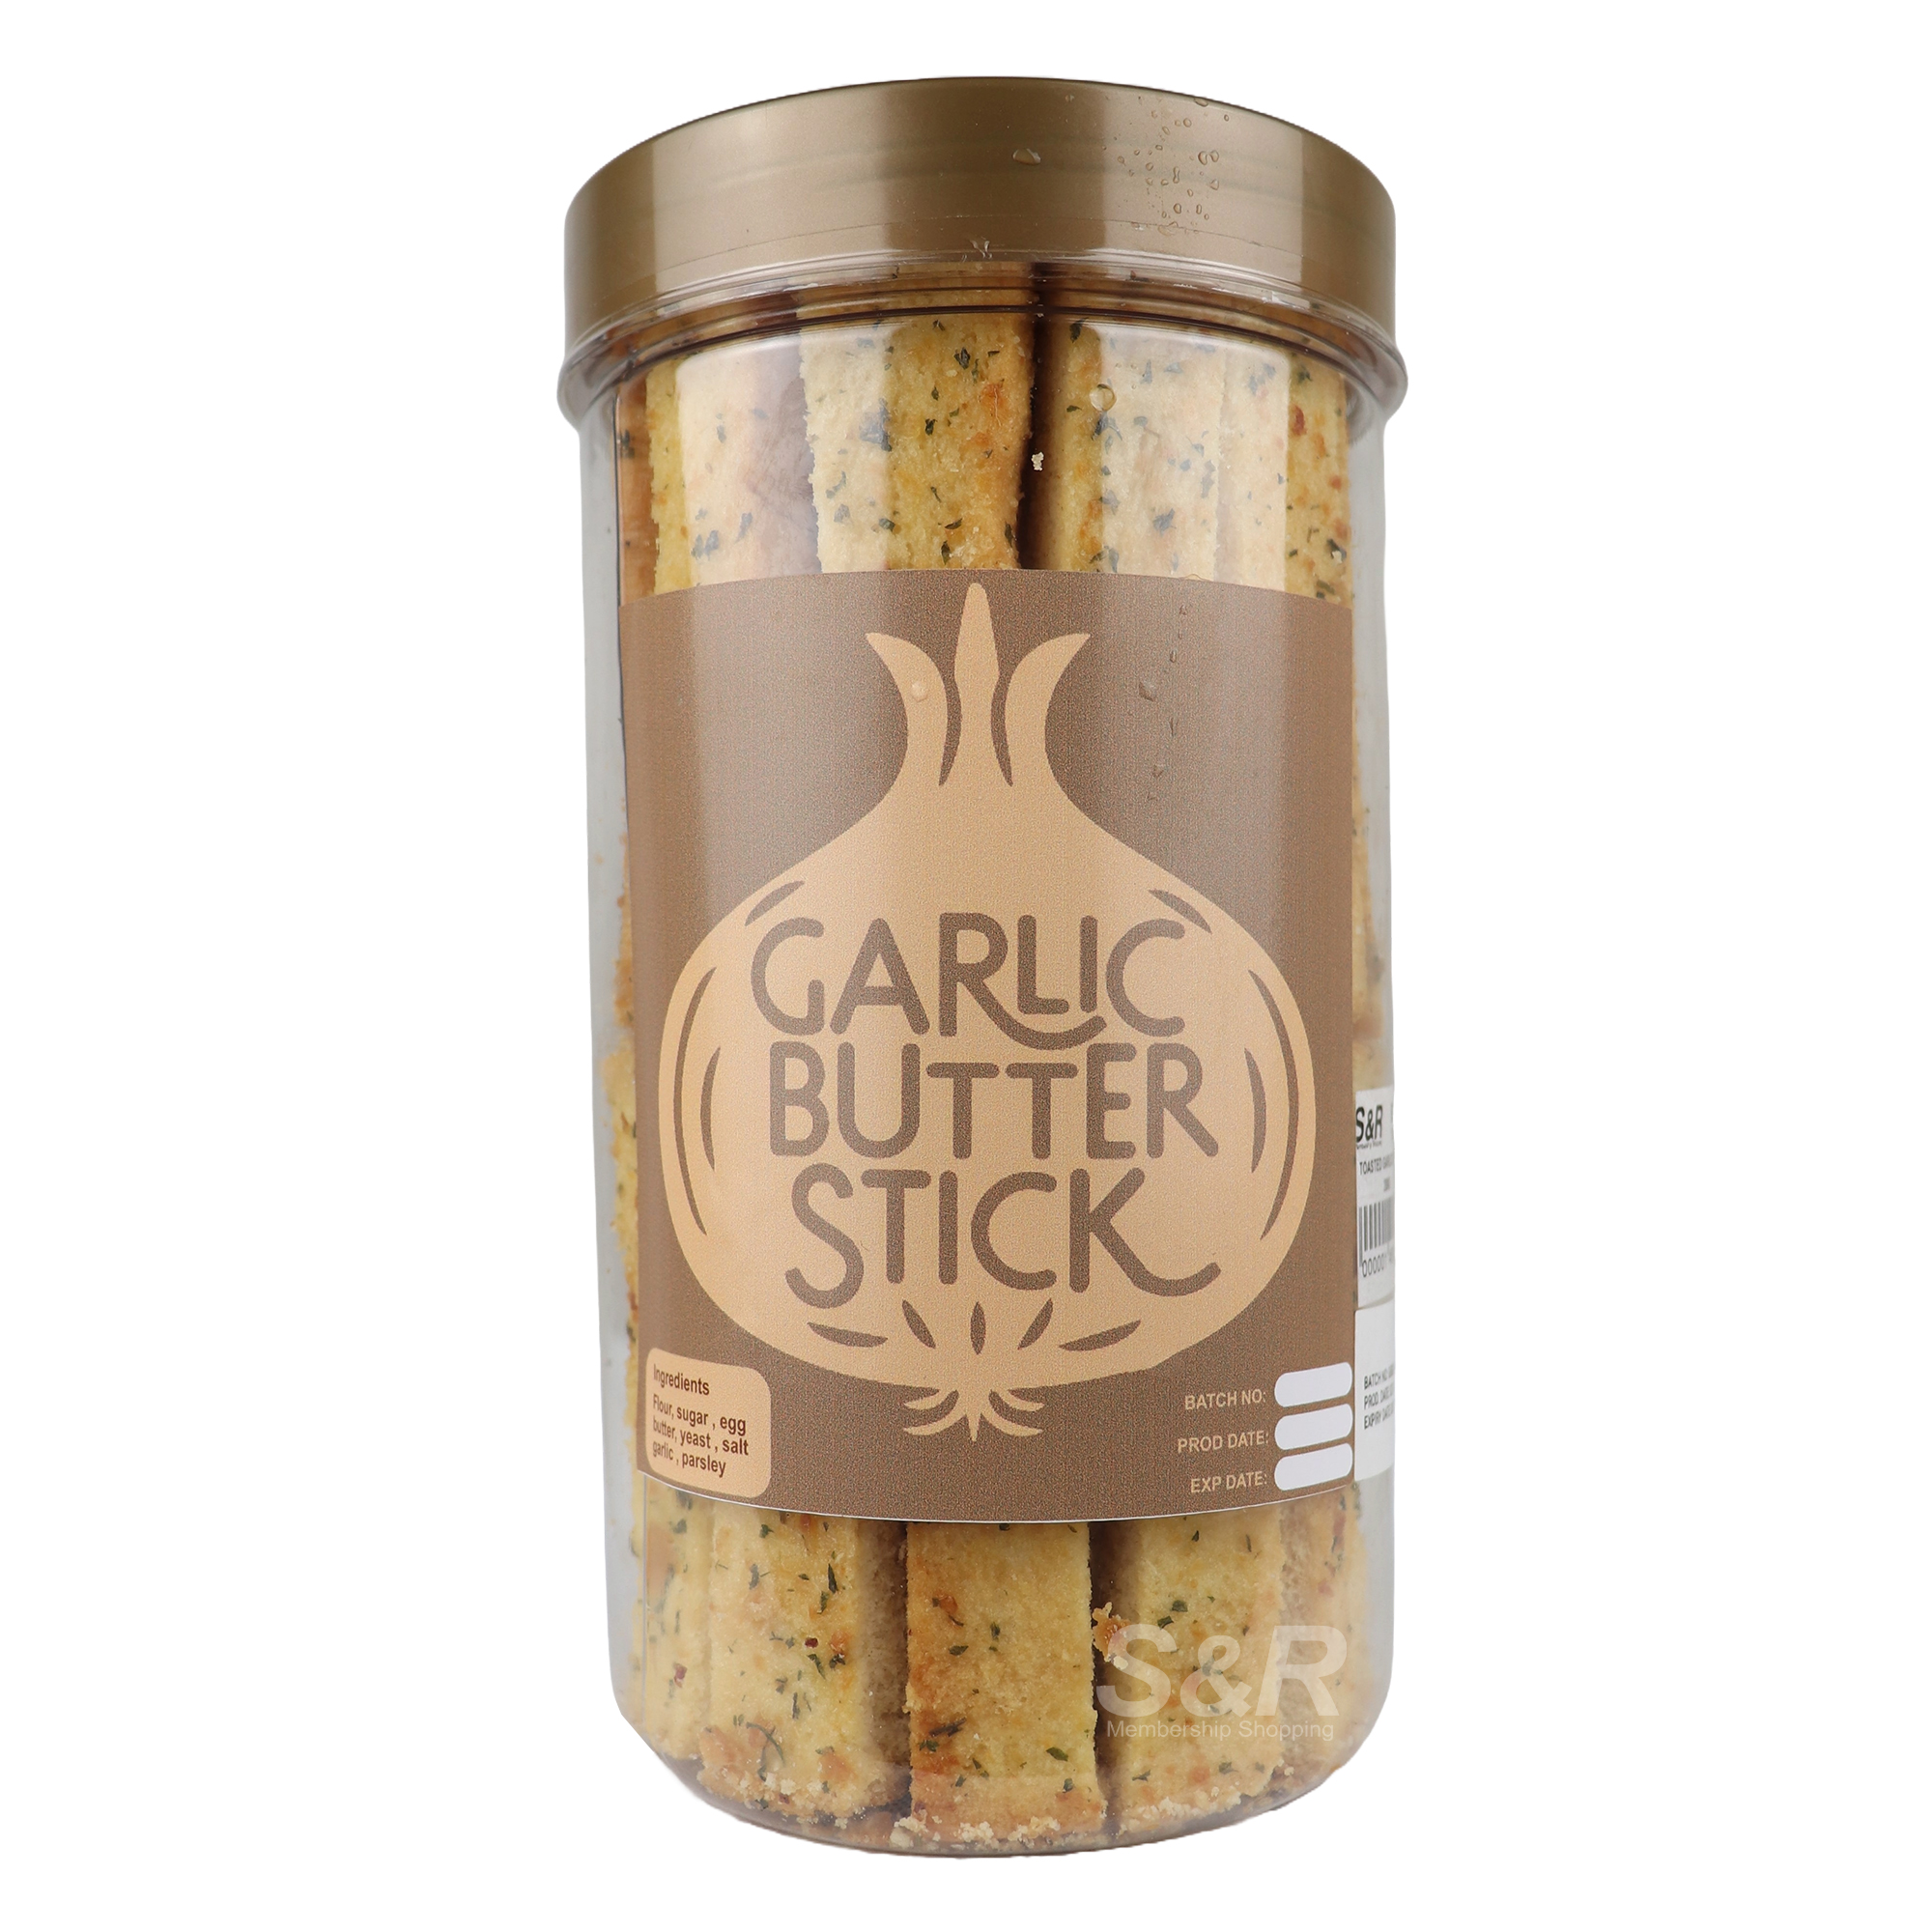 Toasted Garlic Butter Stick 280g